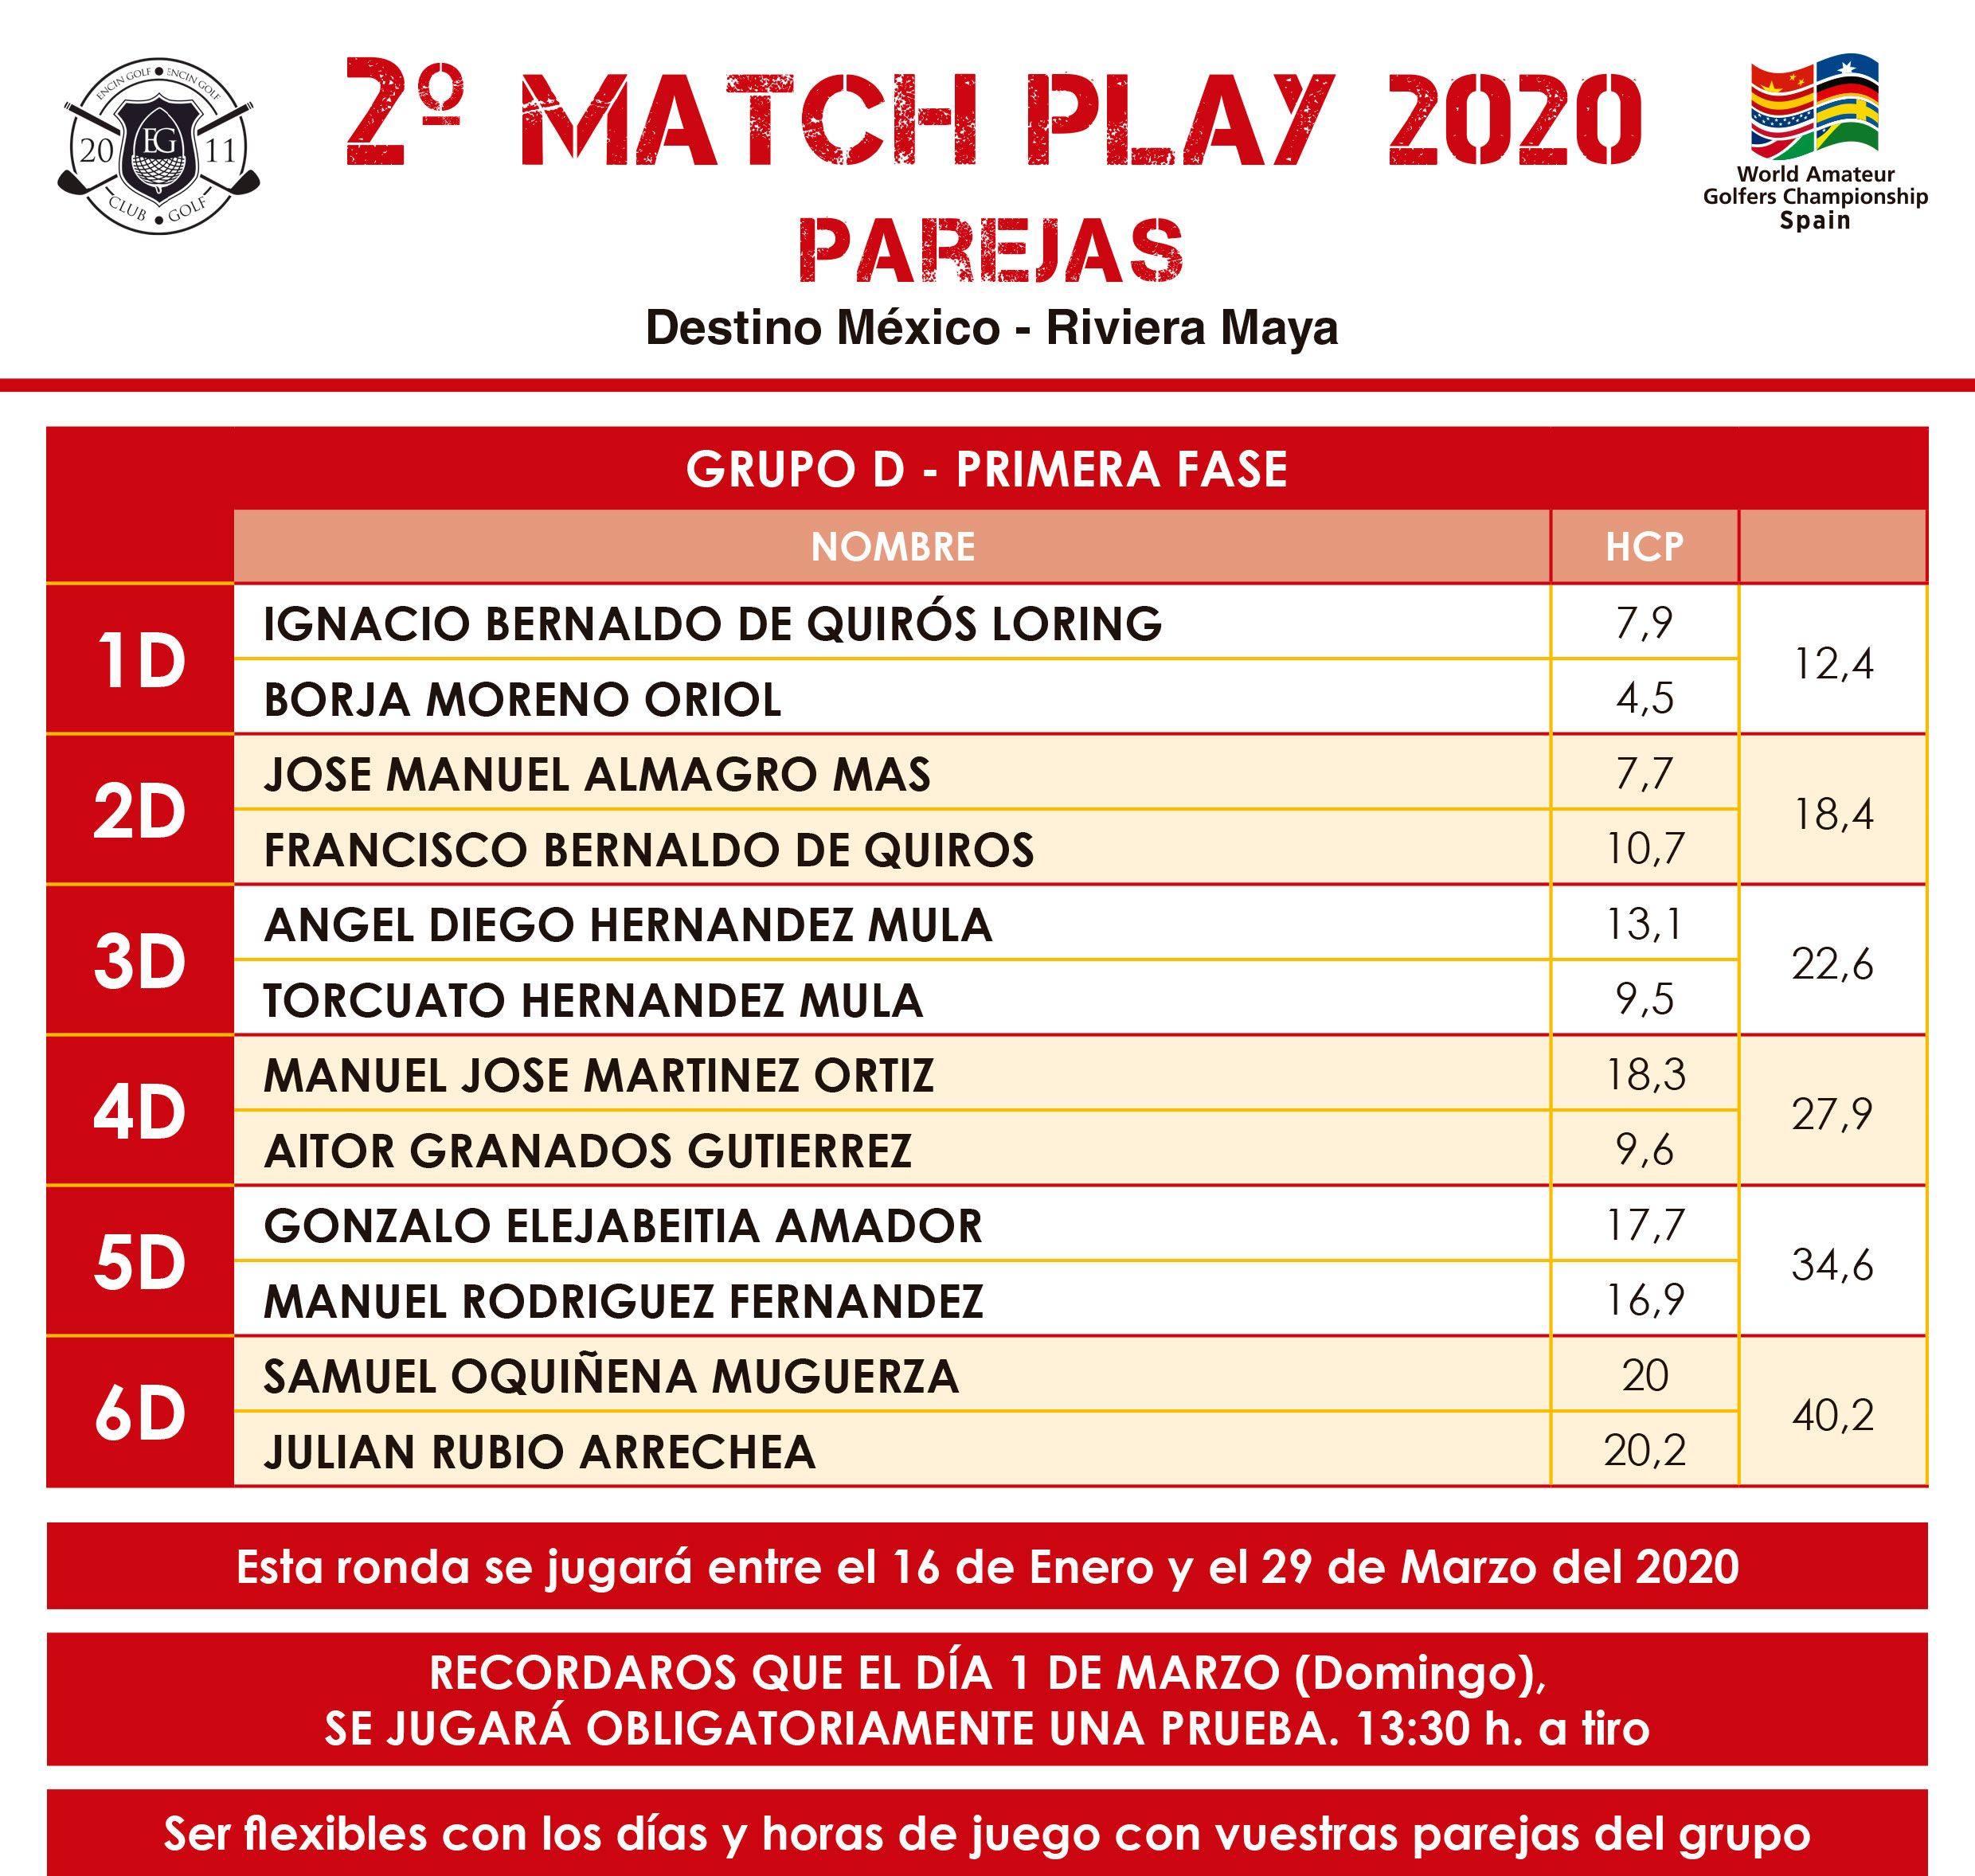 WAGC SPAIN - MATCH PLAY 2020 PAREJAS - 1ª FASE - GRUPO D